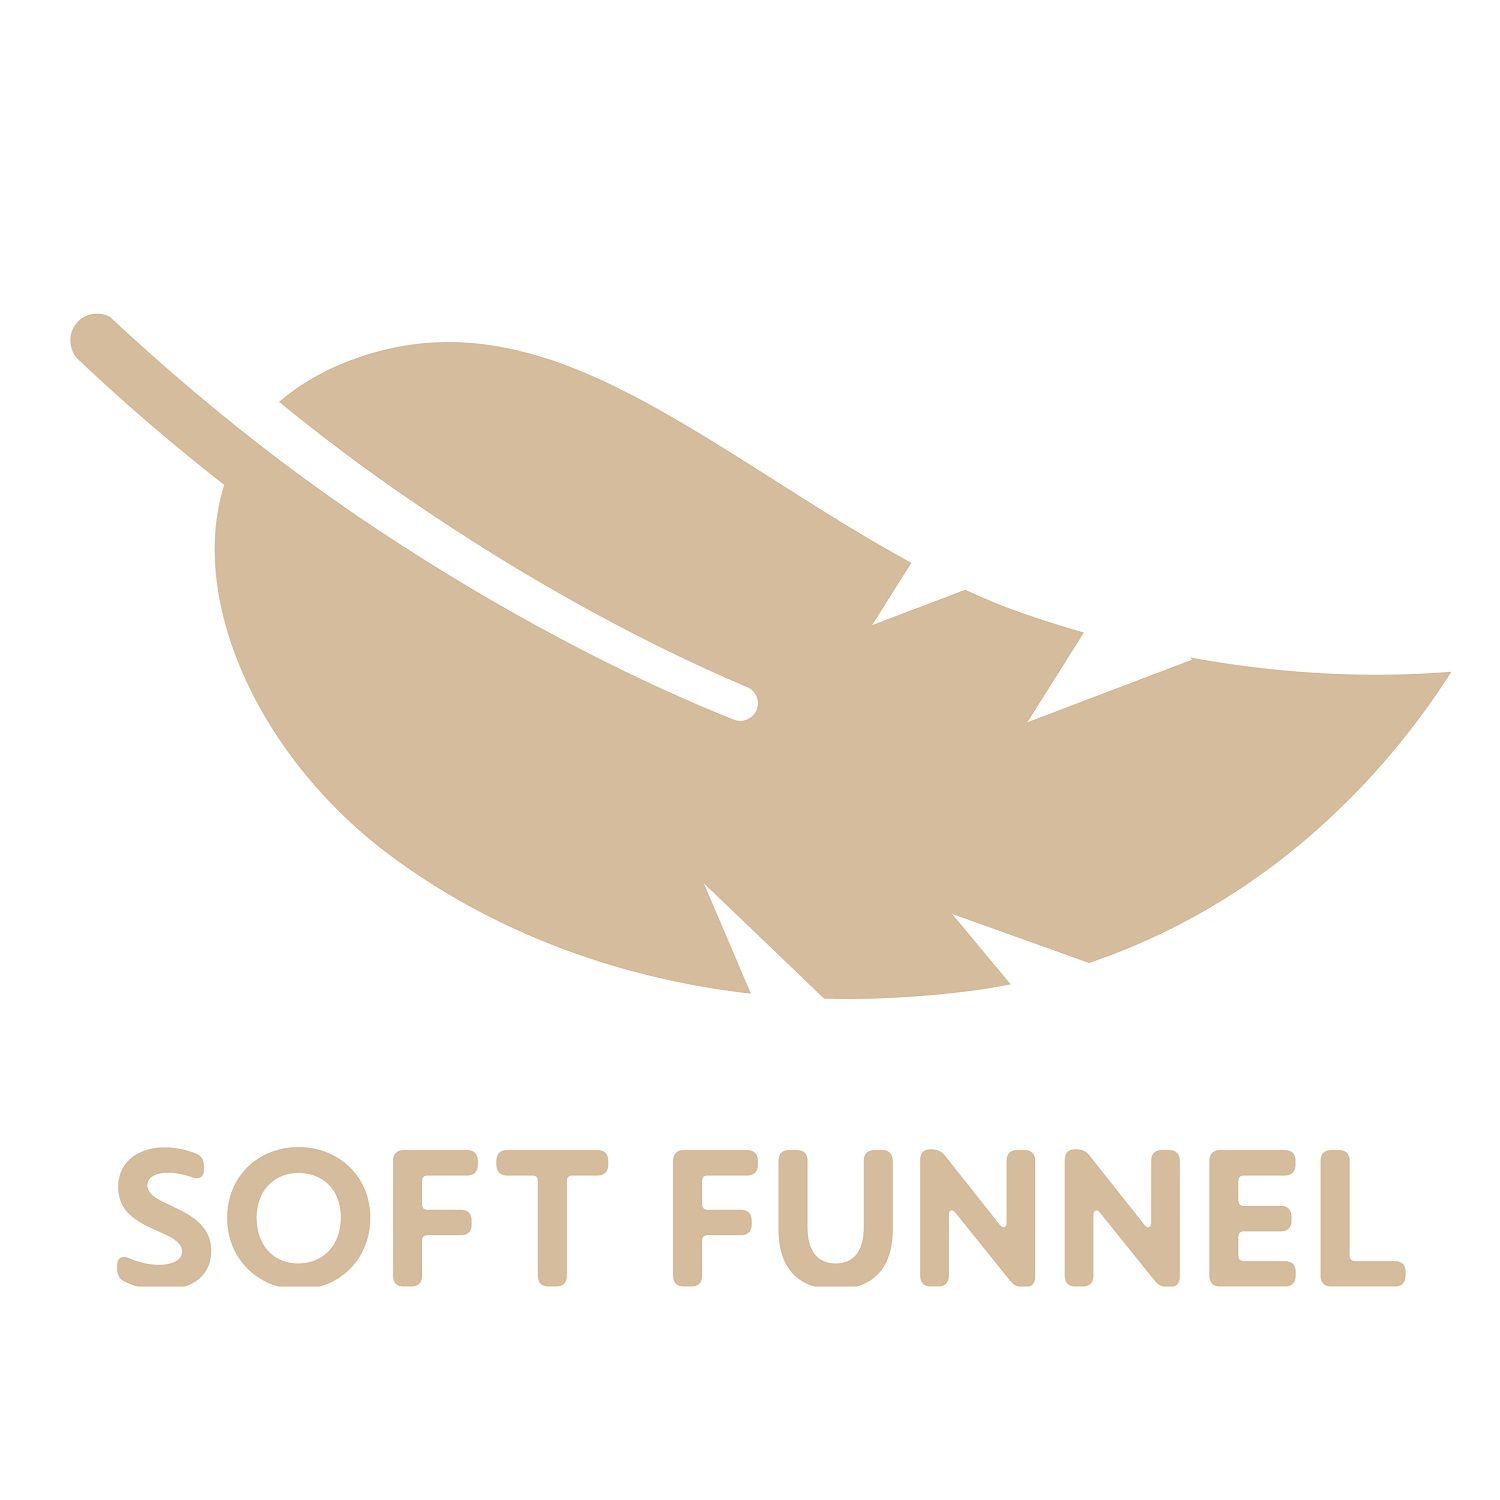 The soft funnel allows maximum comfort.